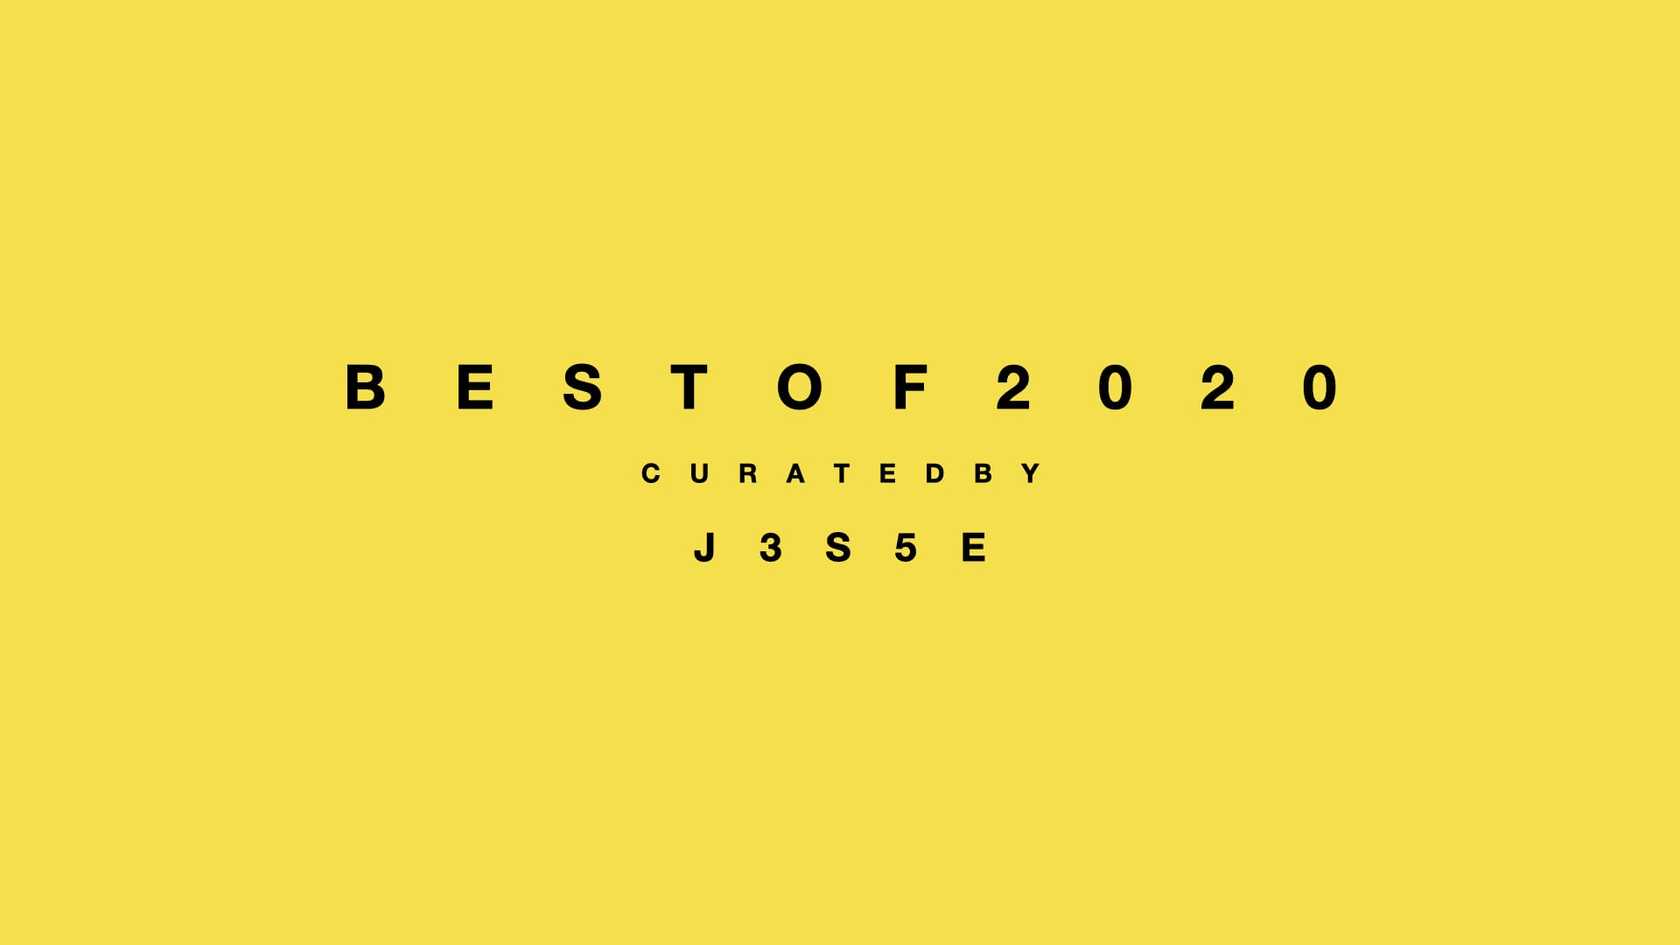 Jesse's best of 2020